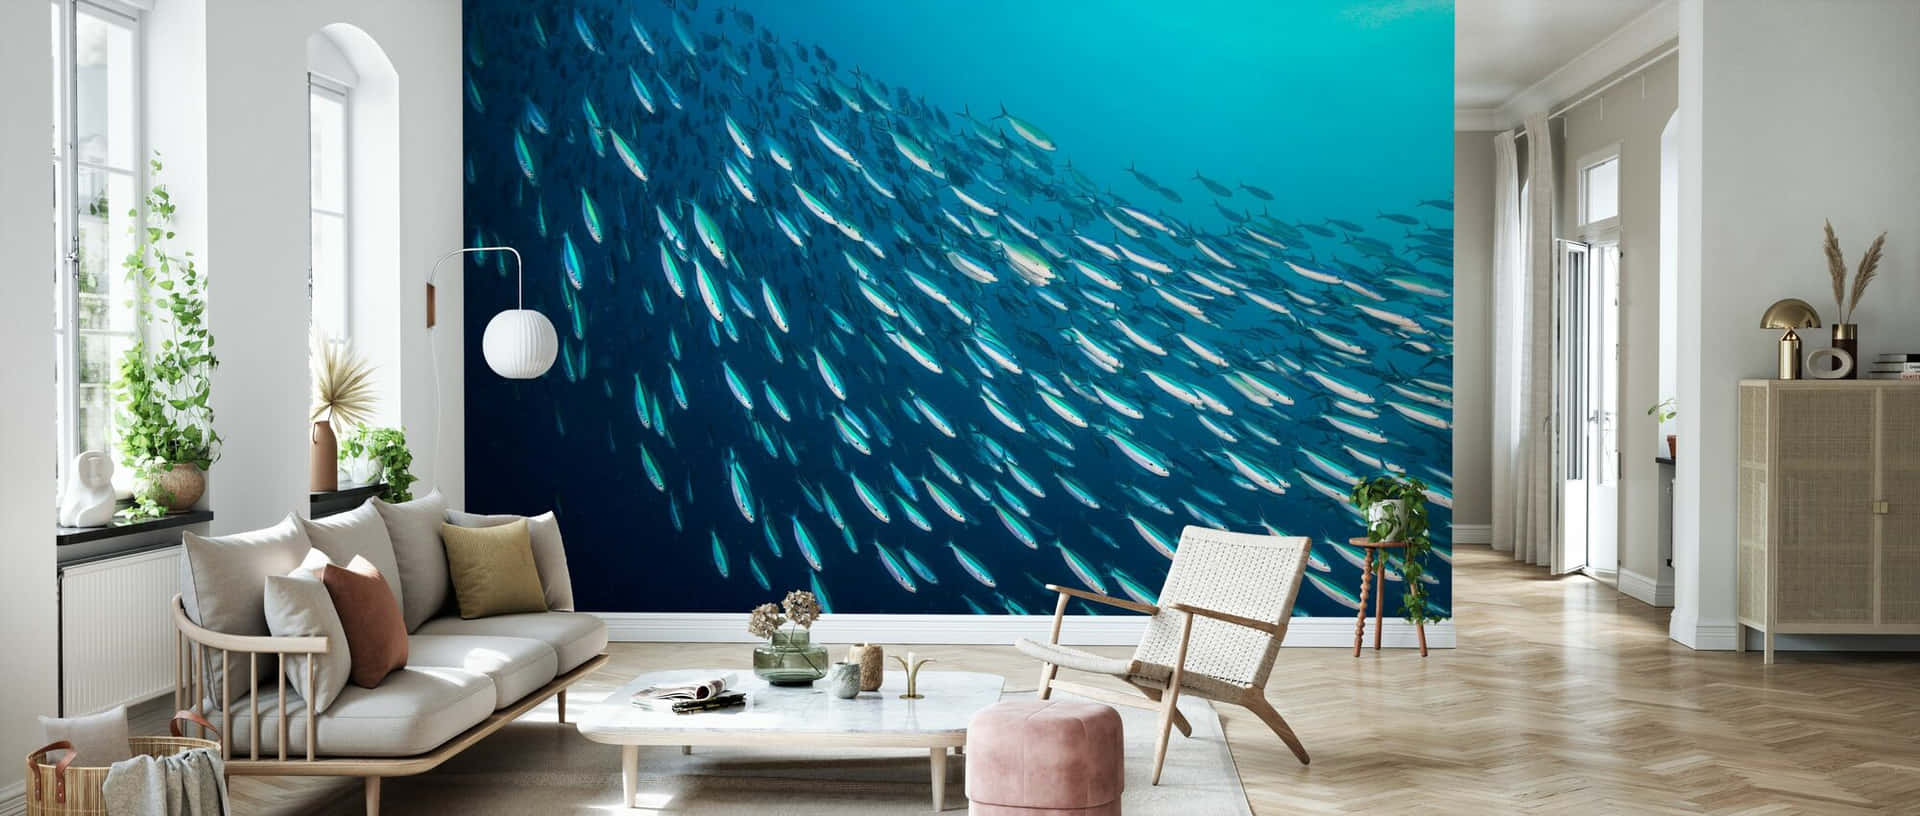 Underwater Schoolof Fish Wall Mural Wallpaper